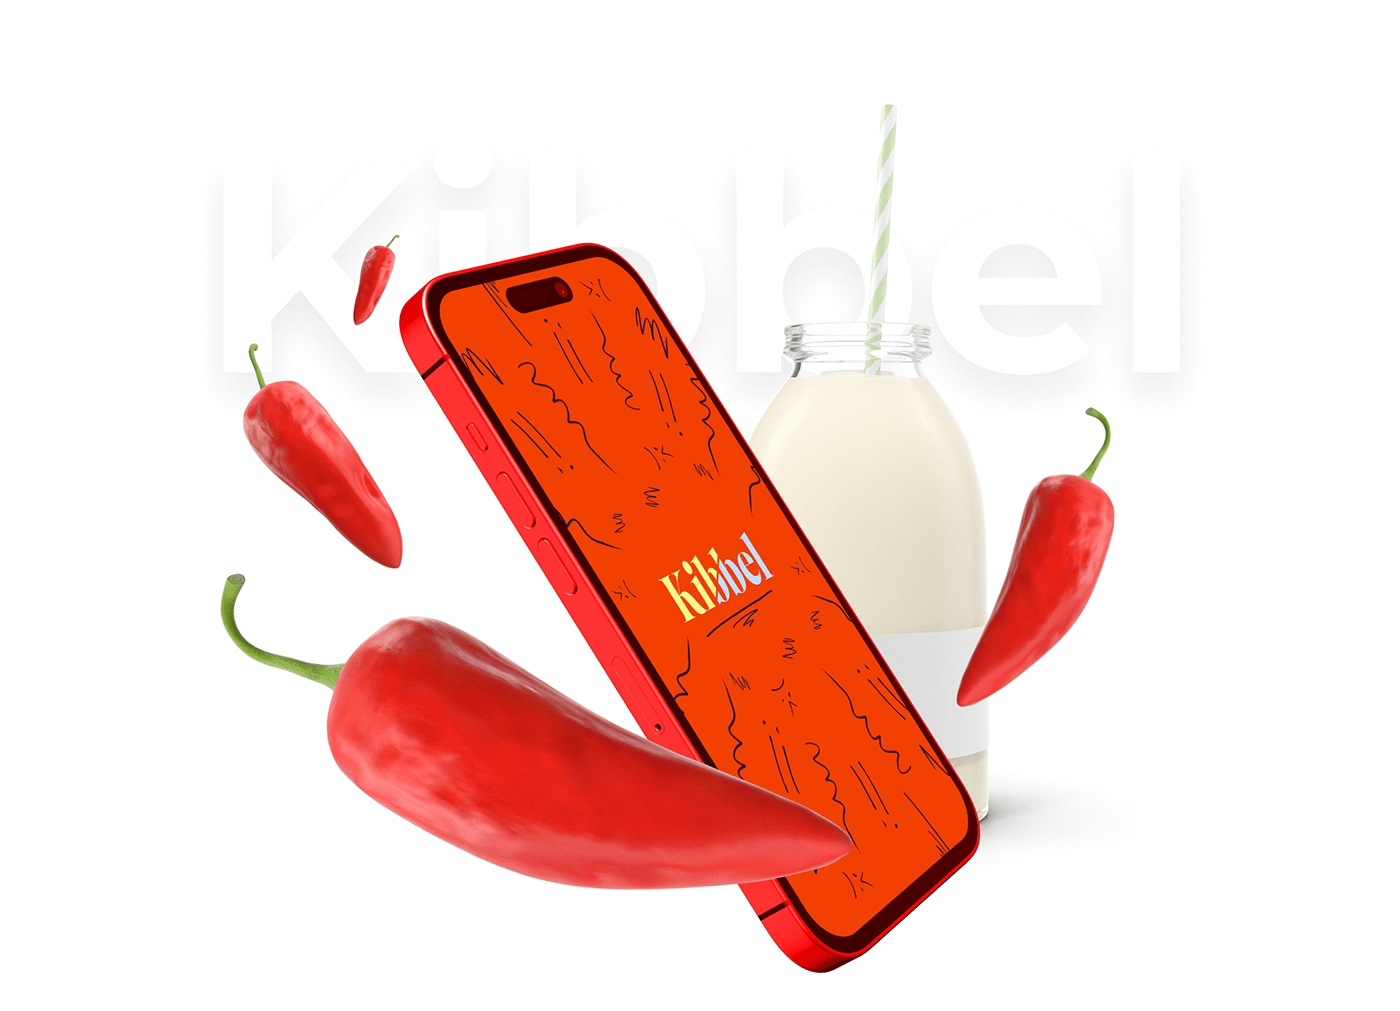 Card Swiping chat app Chili Pepper Conversation App ice breaker kalvijn Kibbel red app red branding Spicy Mode